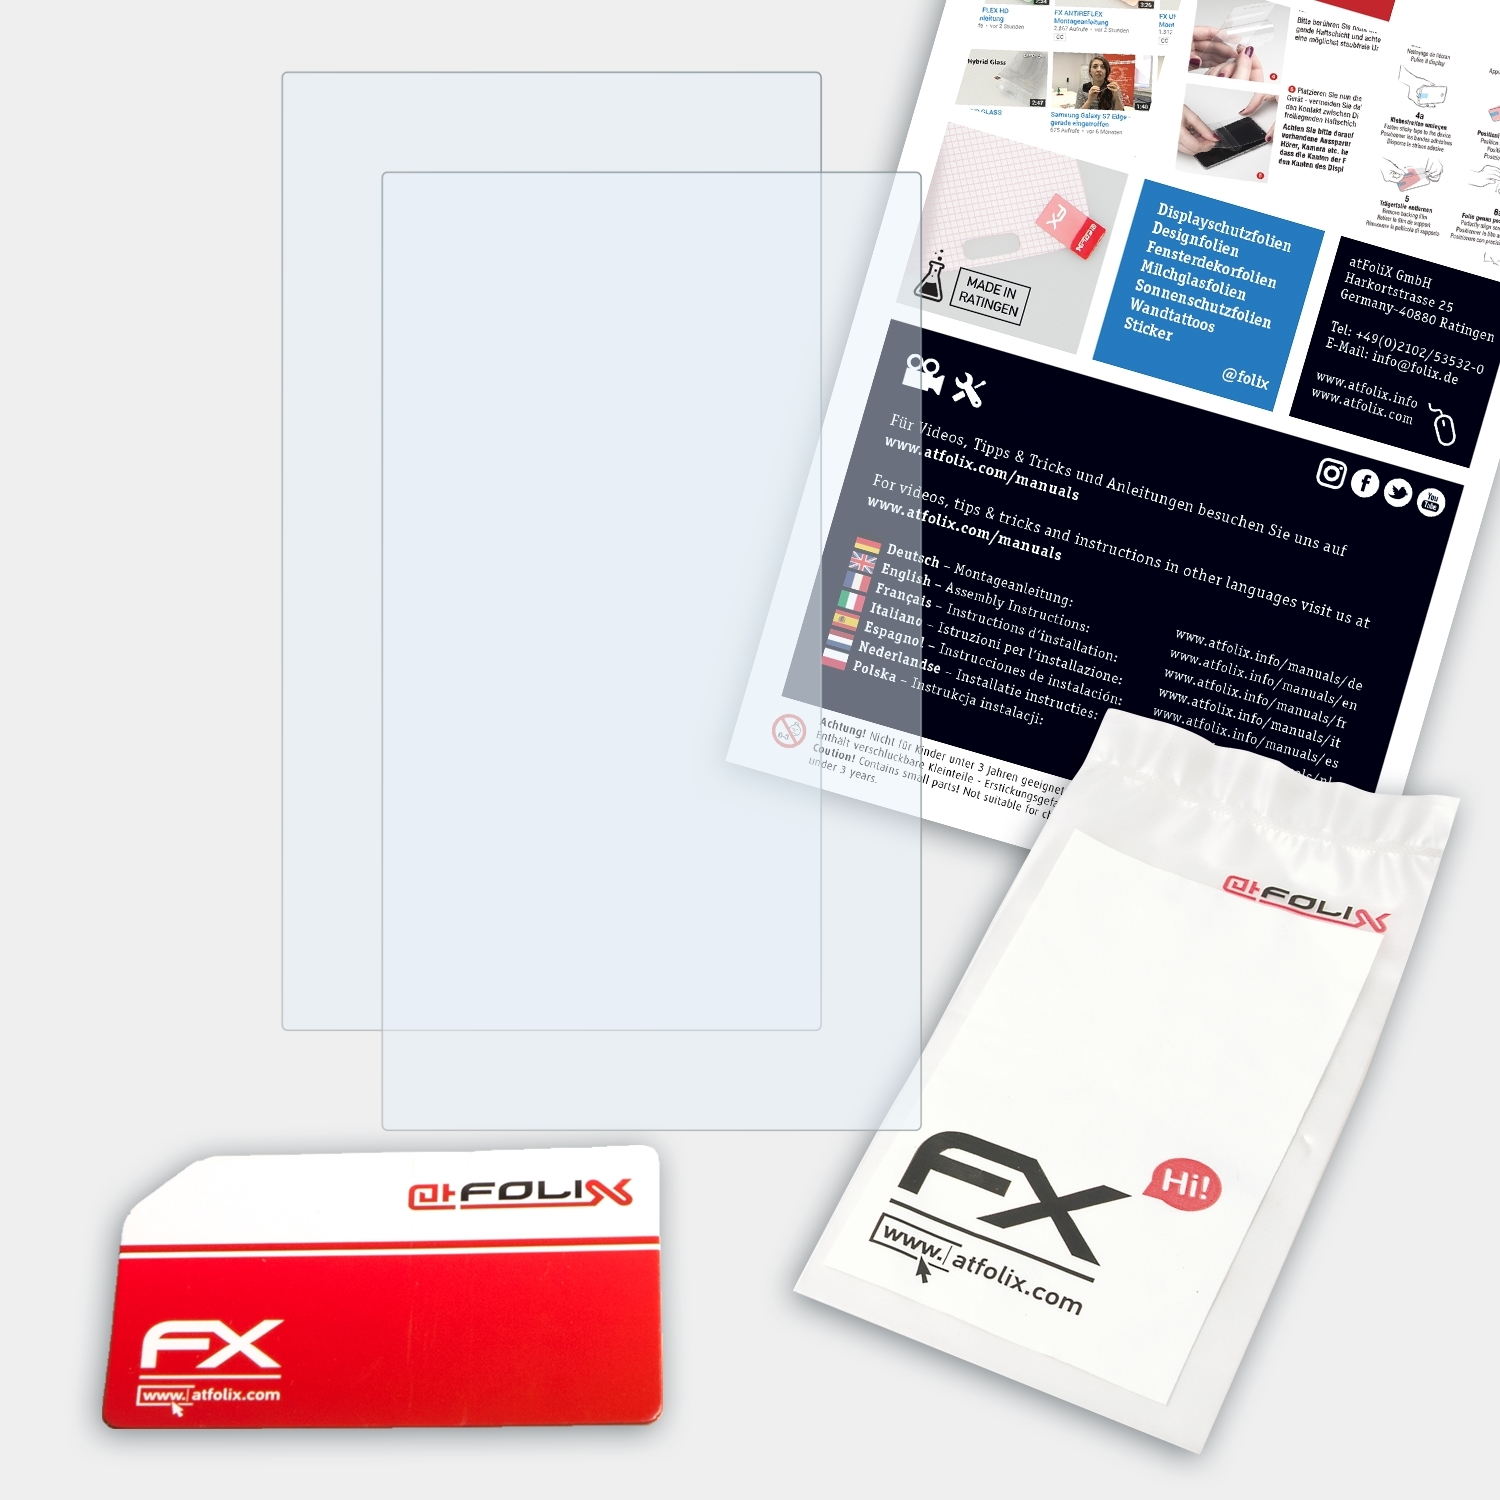 ATFOLIX 2x FX-Clear Pioneer Displayschutz(für AVH-X3500DAB)